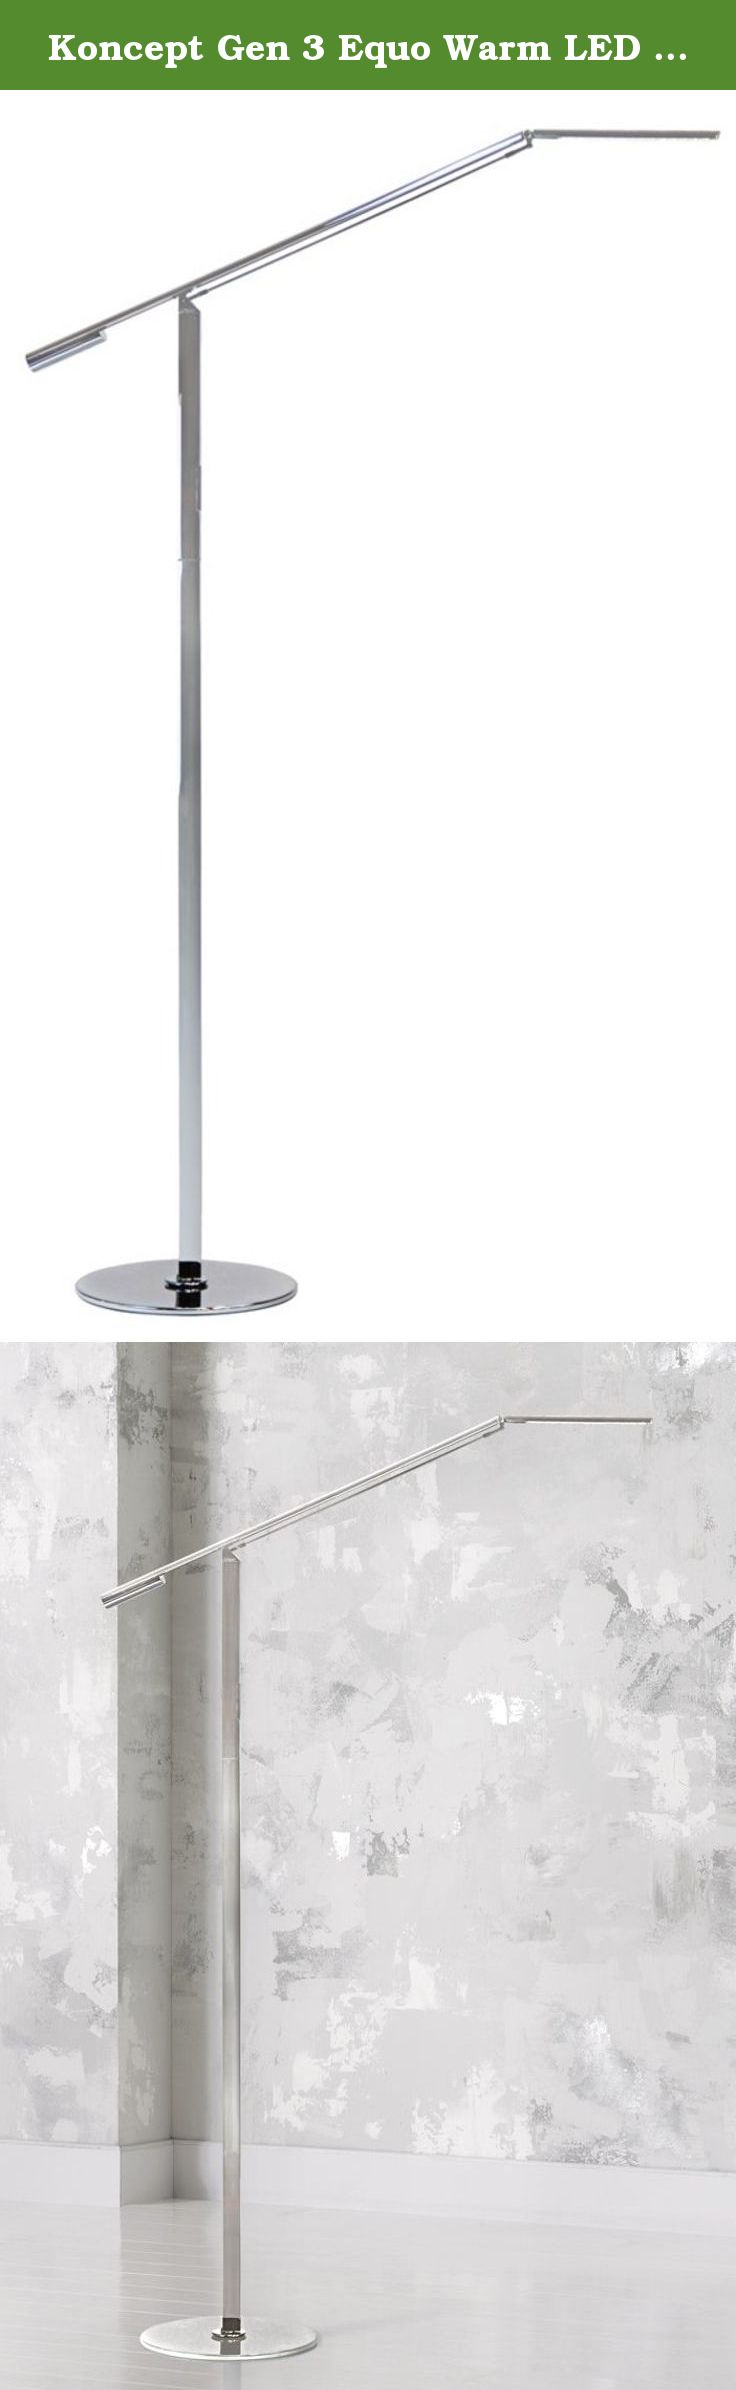 Koncept Gen 3 Equo Warm Led Modern Floor Lamp Chrome The in size 736 X 2390